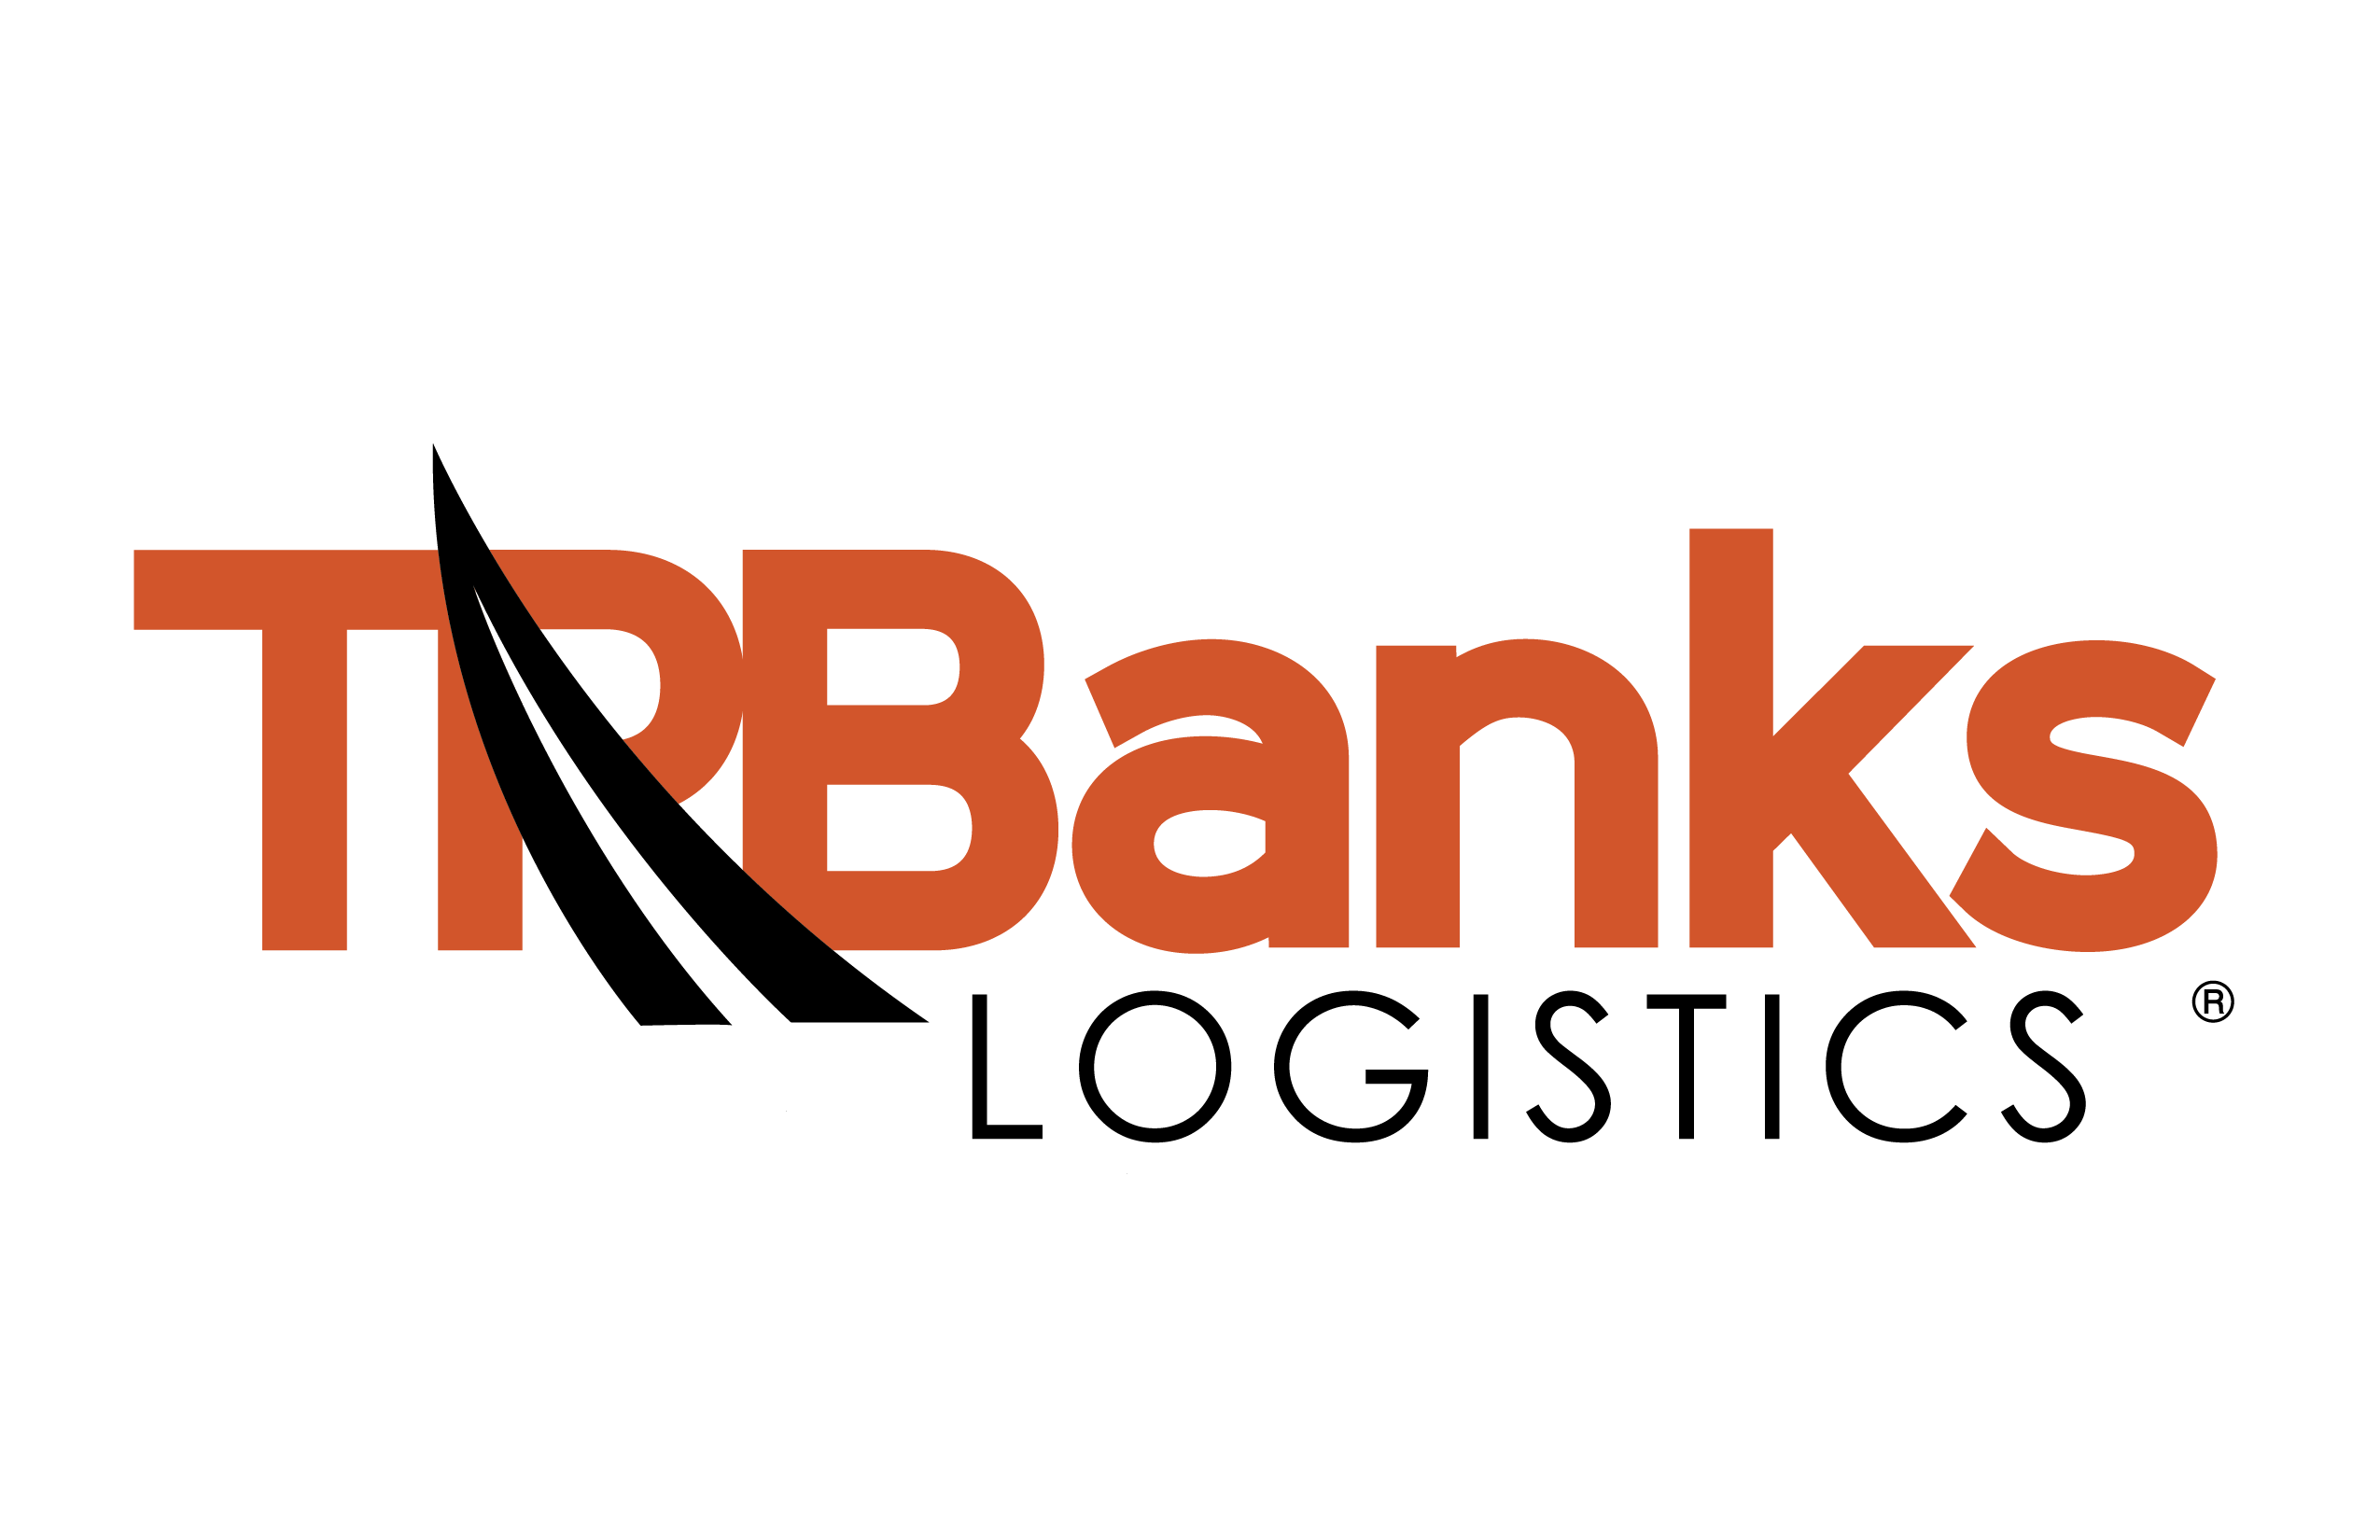 TR Banks Logistics